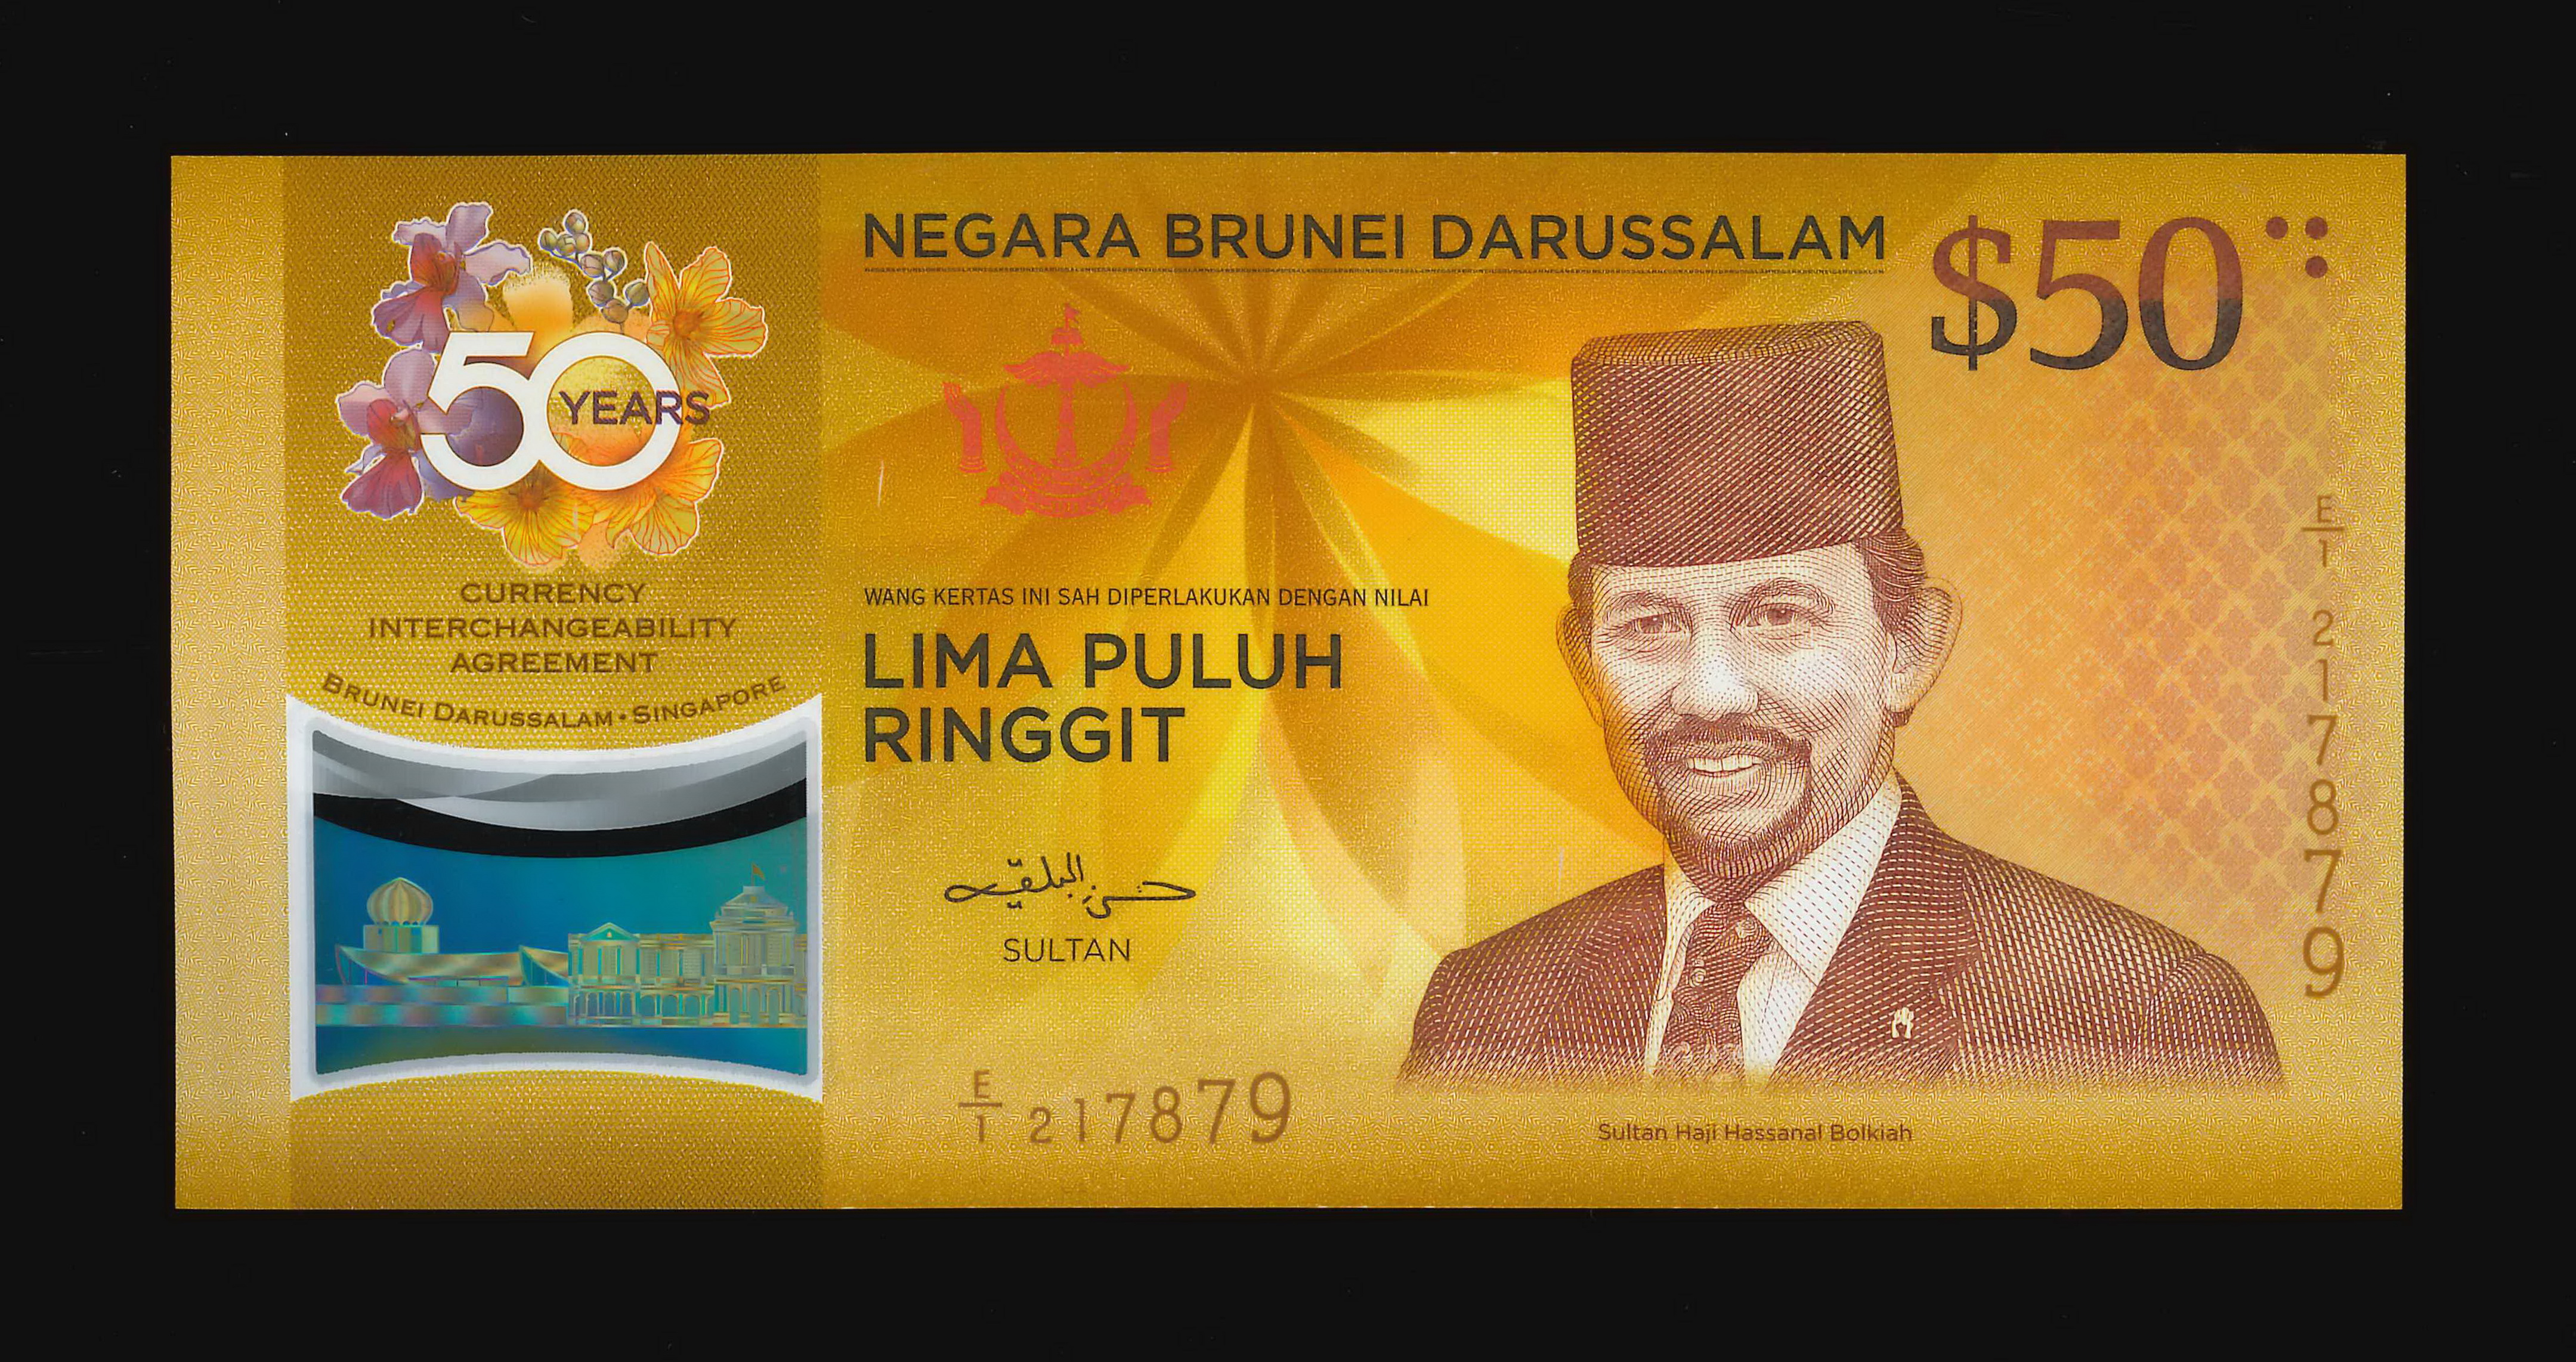 Brunei/Singapore, 2017, 50 Dollars, S/N. 50AC 357530/ E/1 217897